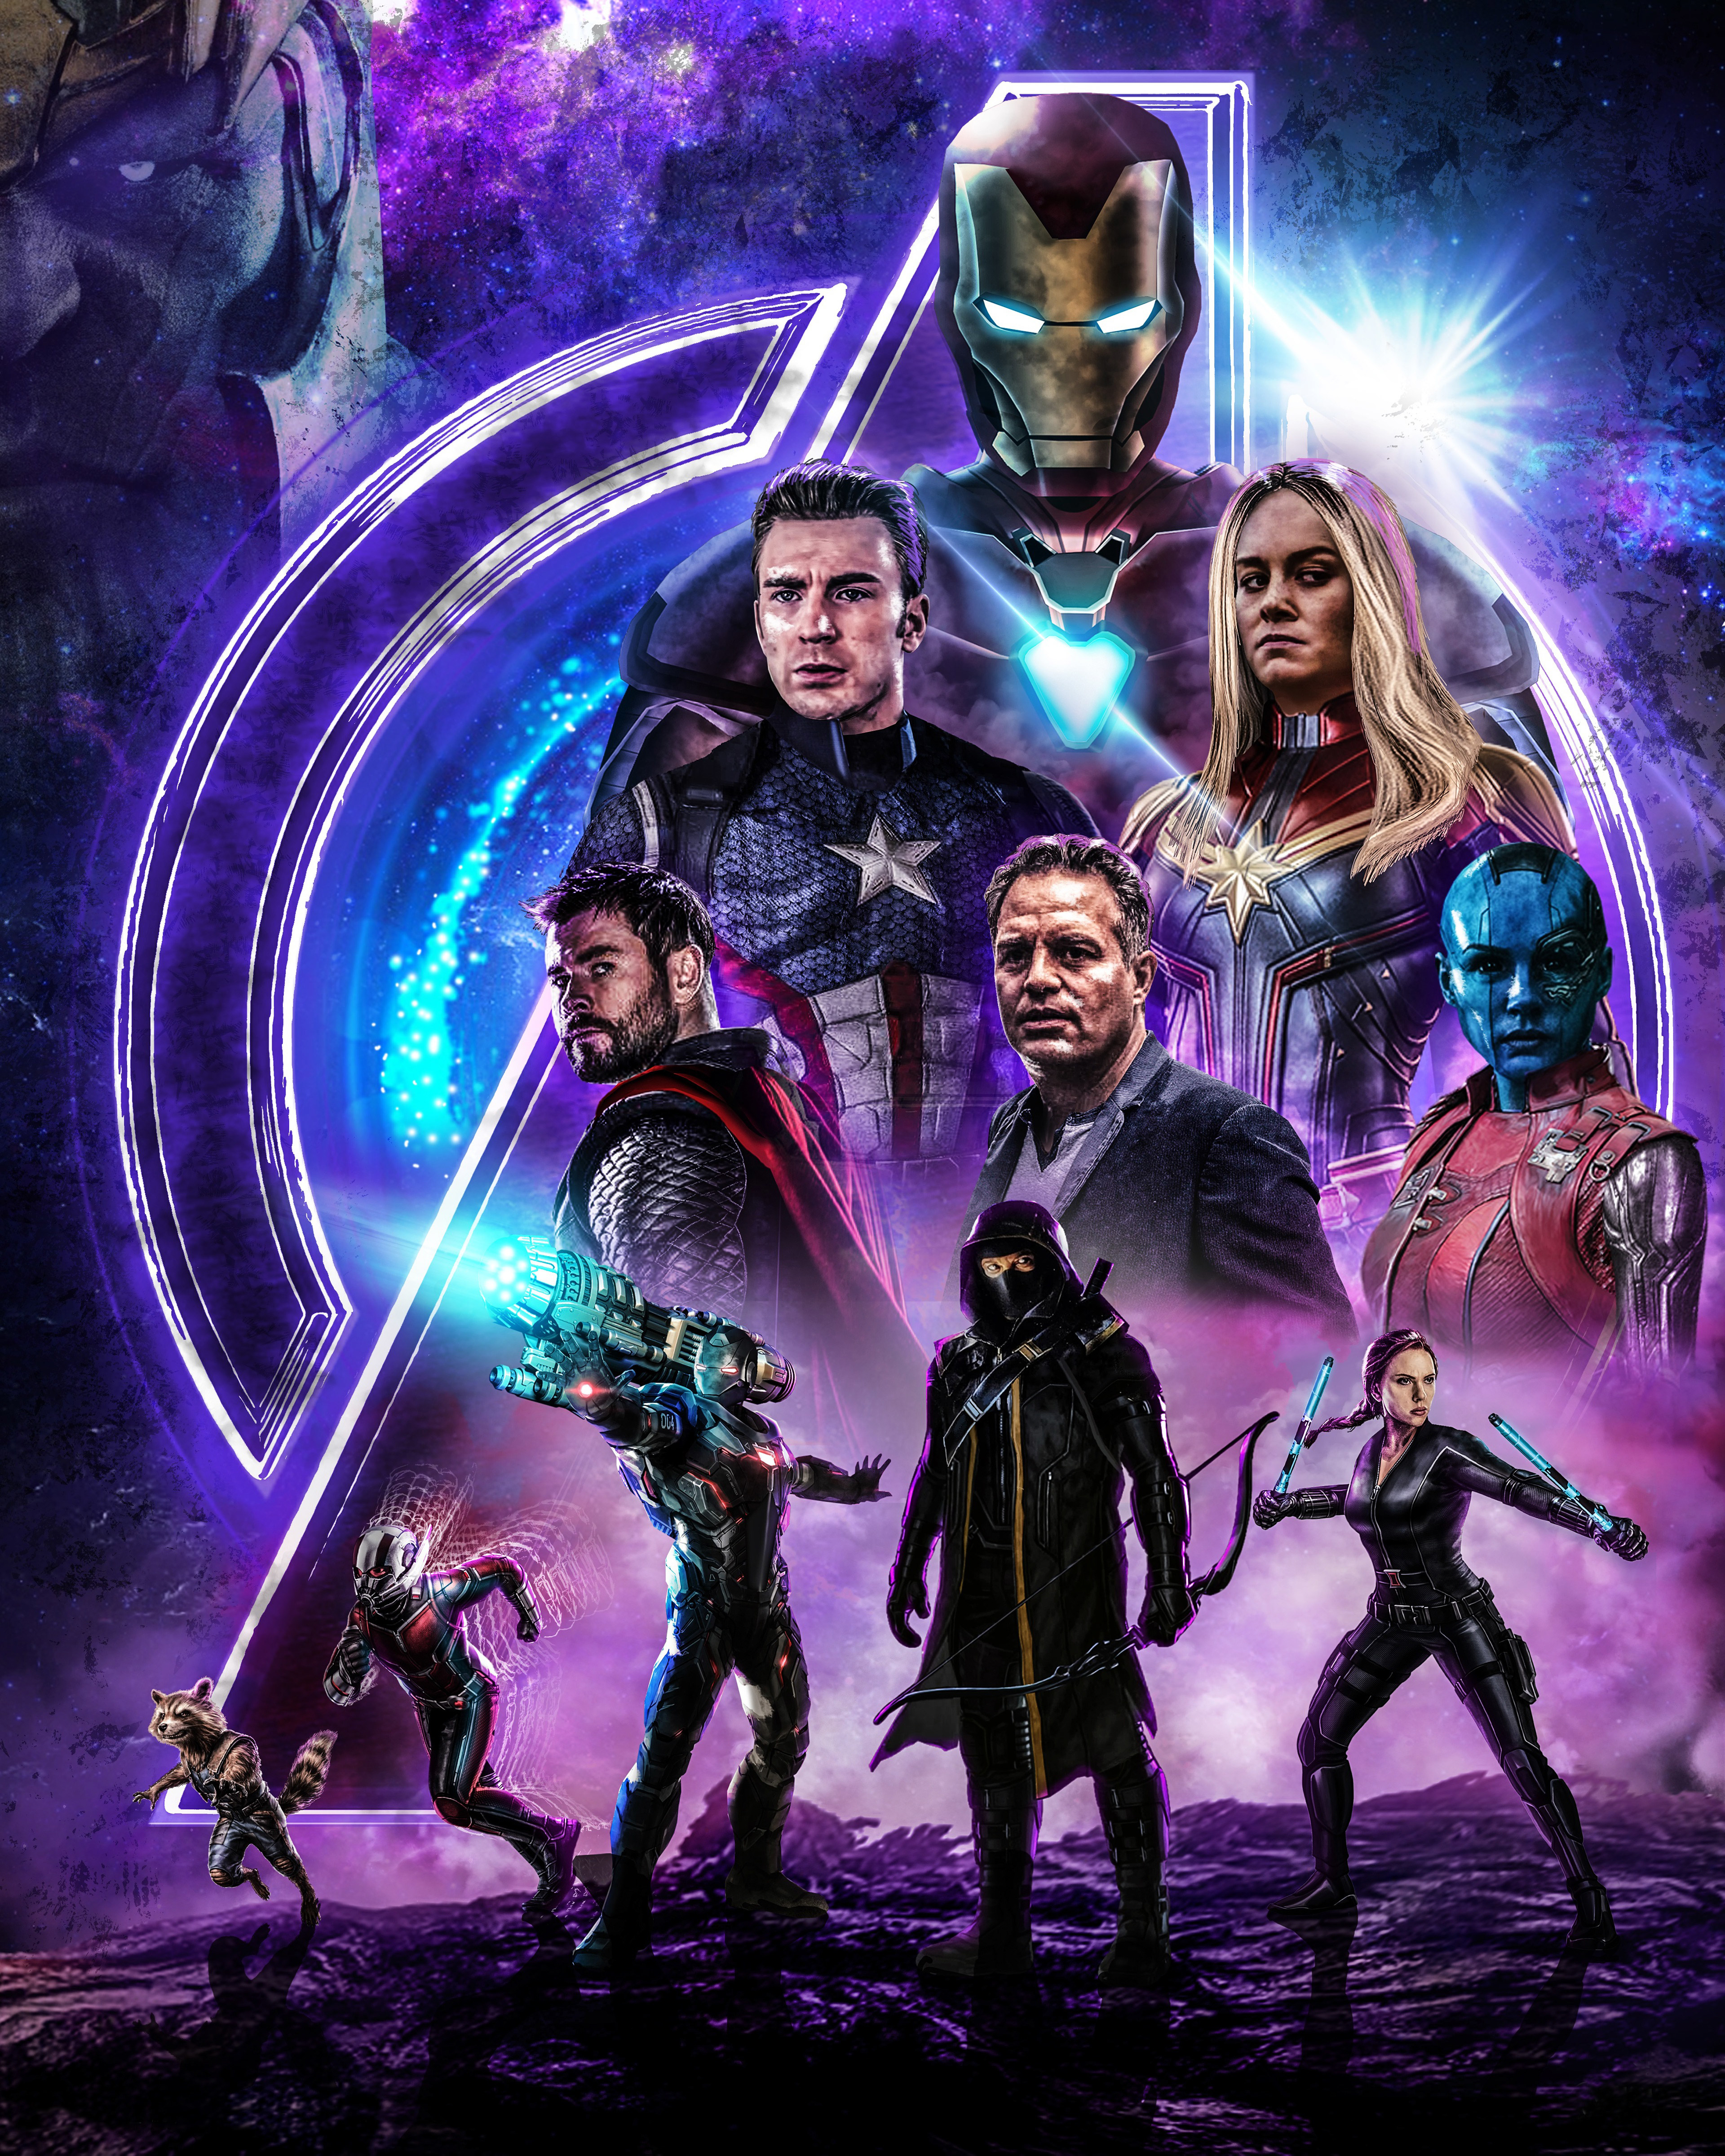 Download Gambar Avengers End Game Hd Wallpaper for Android terbaru 2020